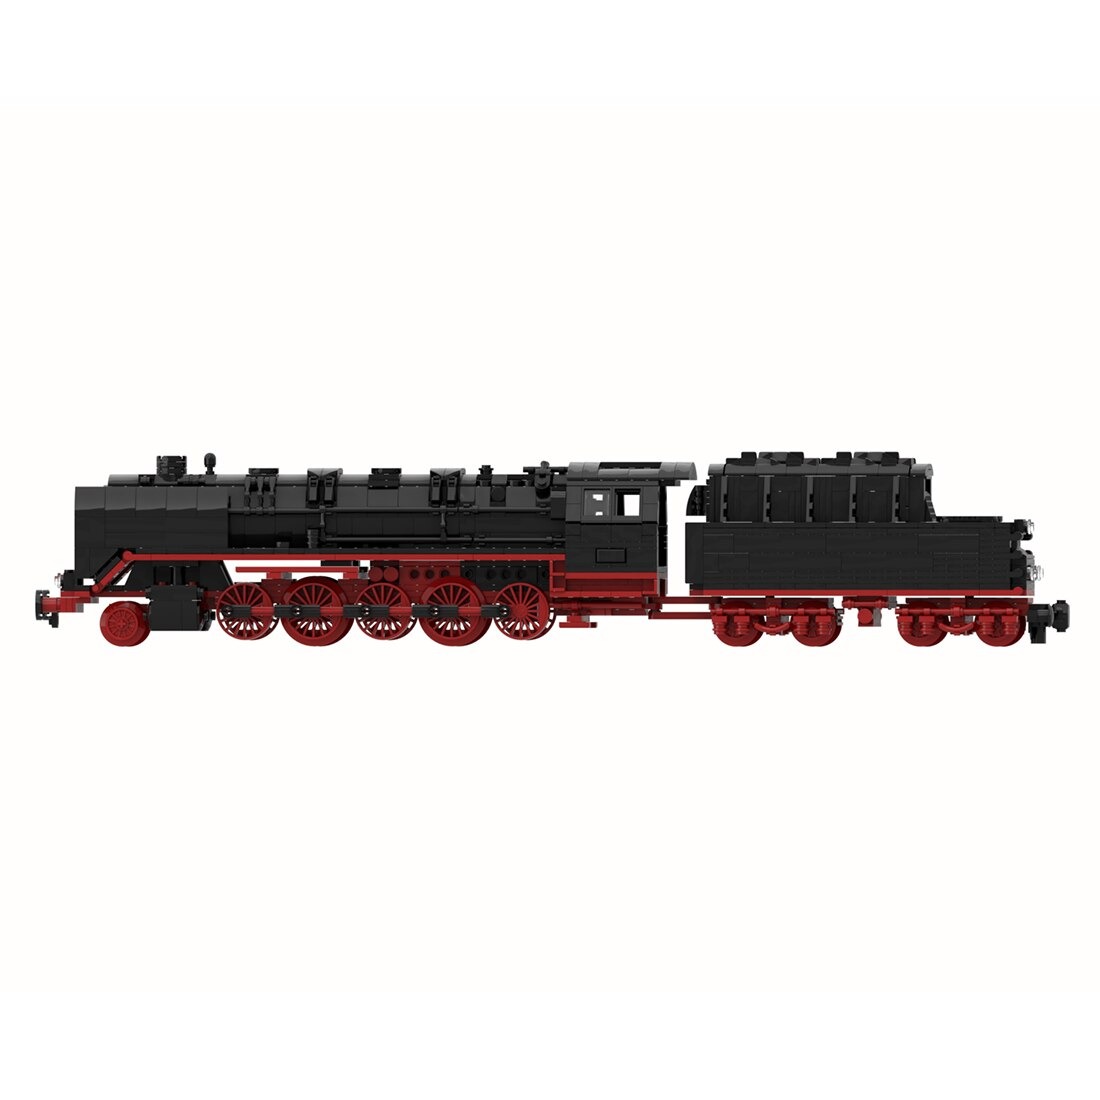 moc 129897 dr baureihe 50 steam locomoti main 5 - DECOOL